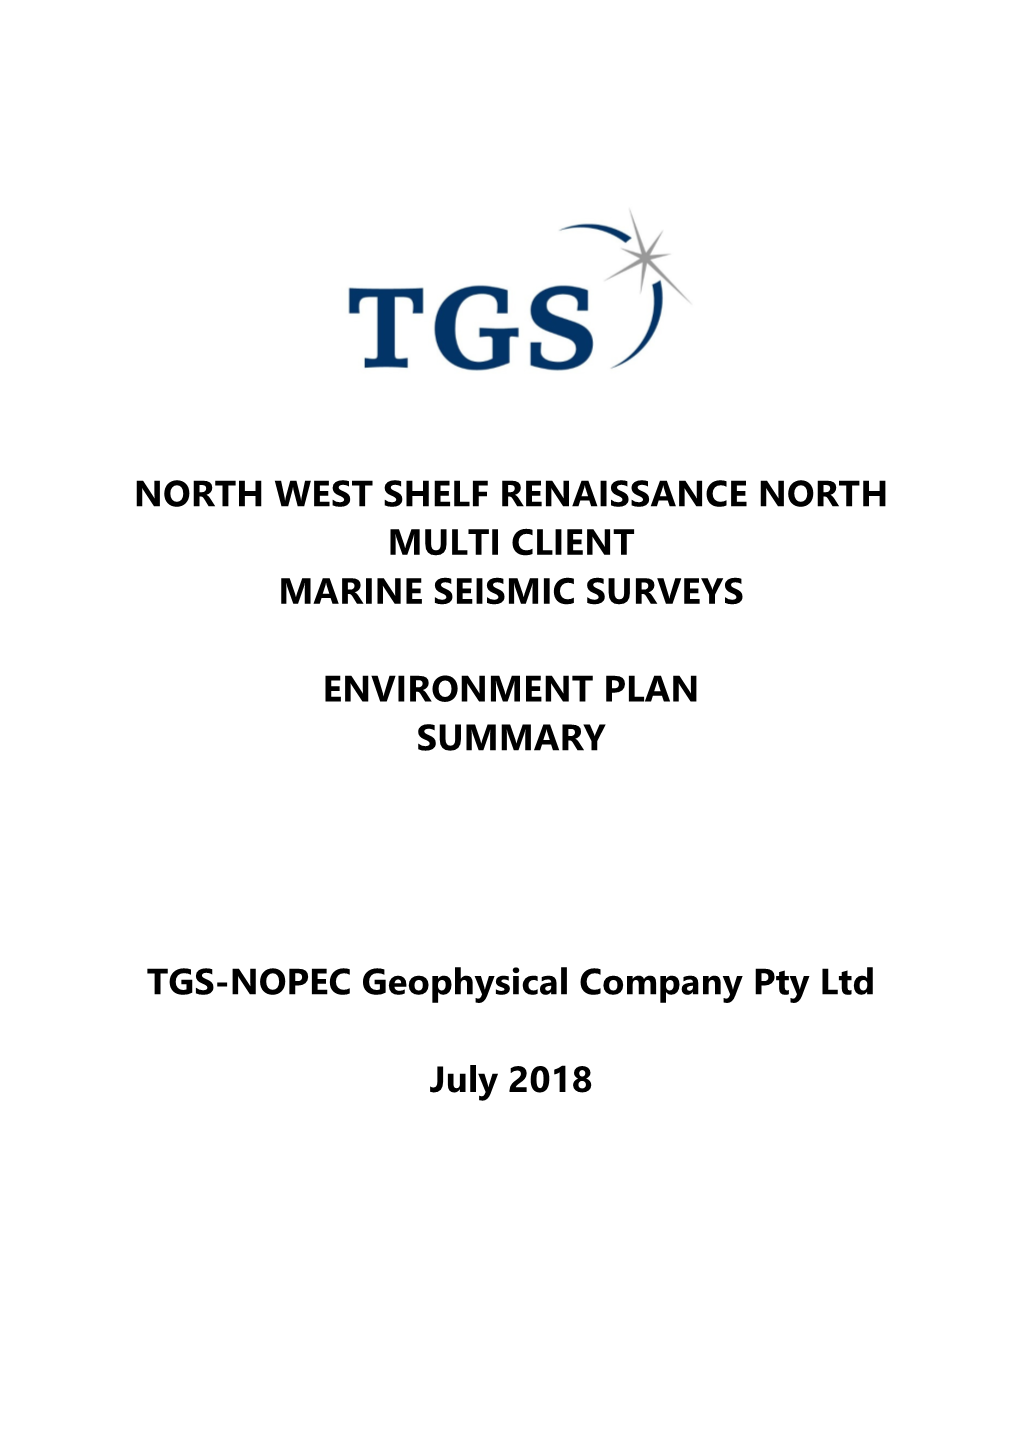 North West Shelf Renaissance North Multi Client Marine Seismic Surveys